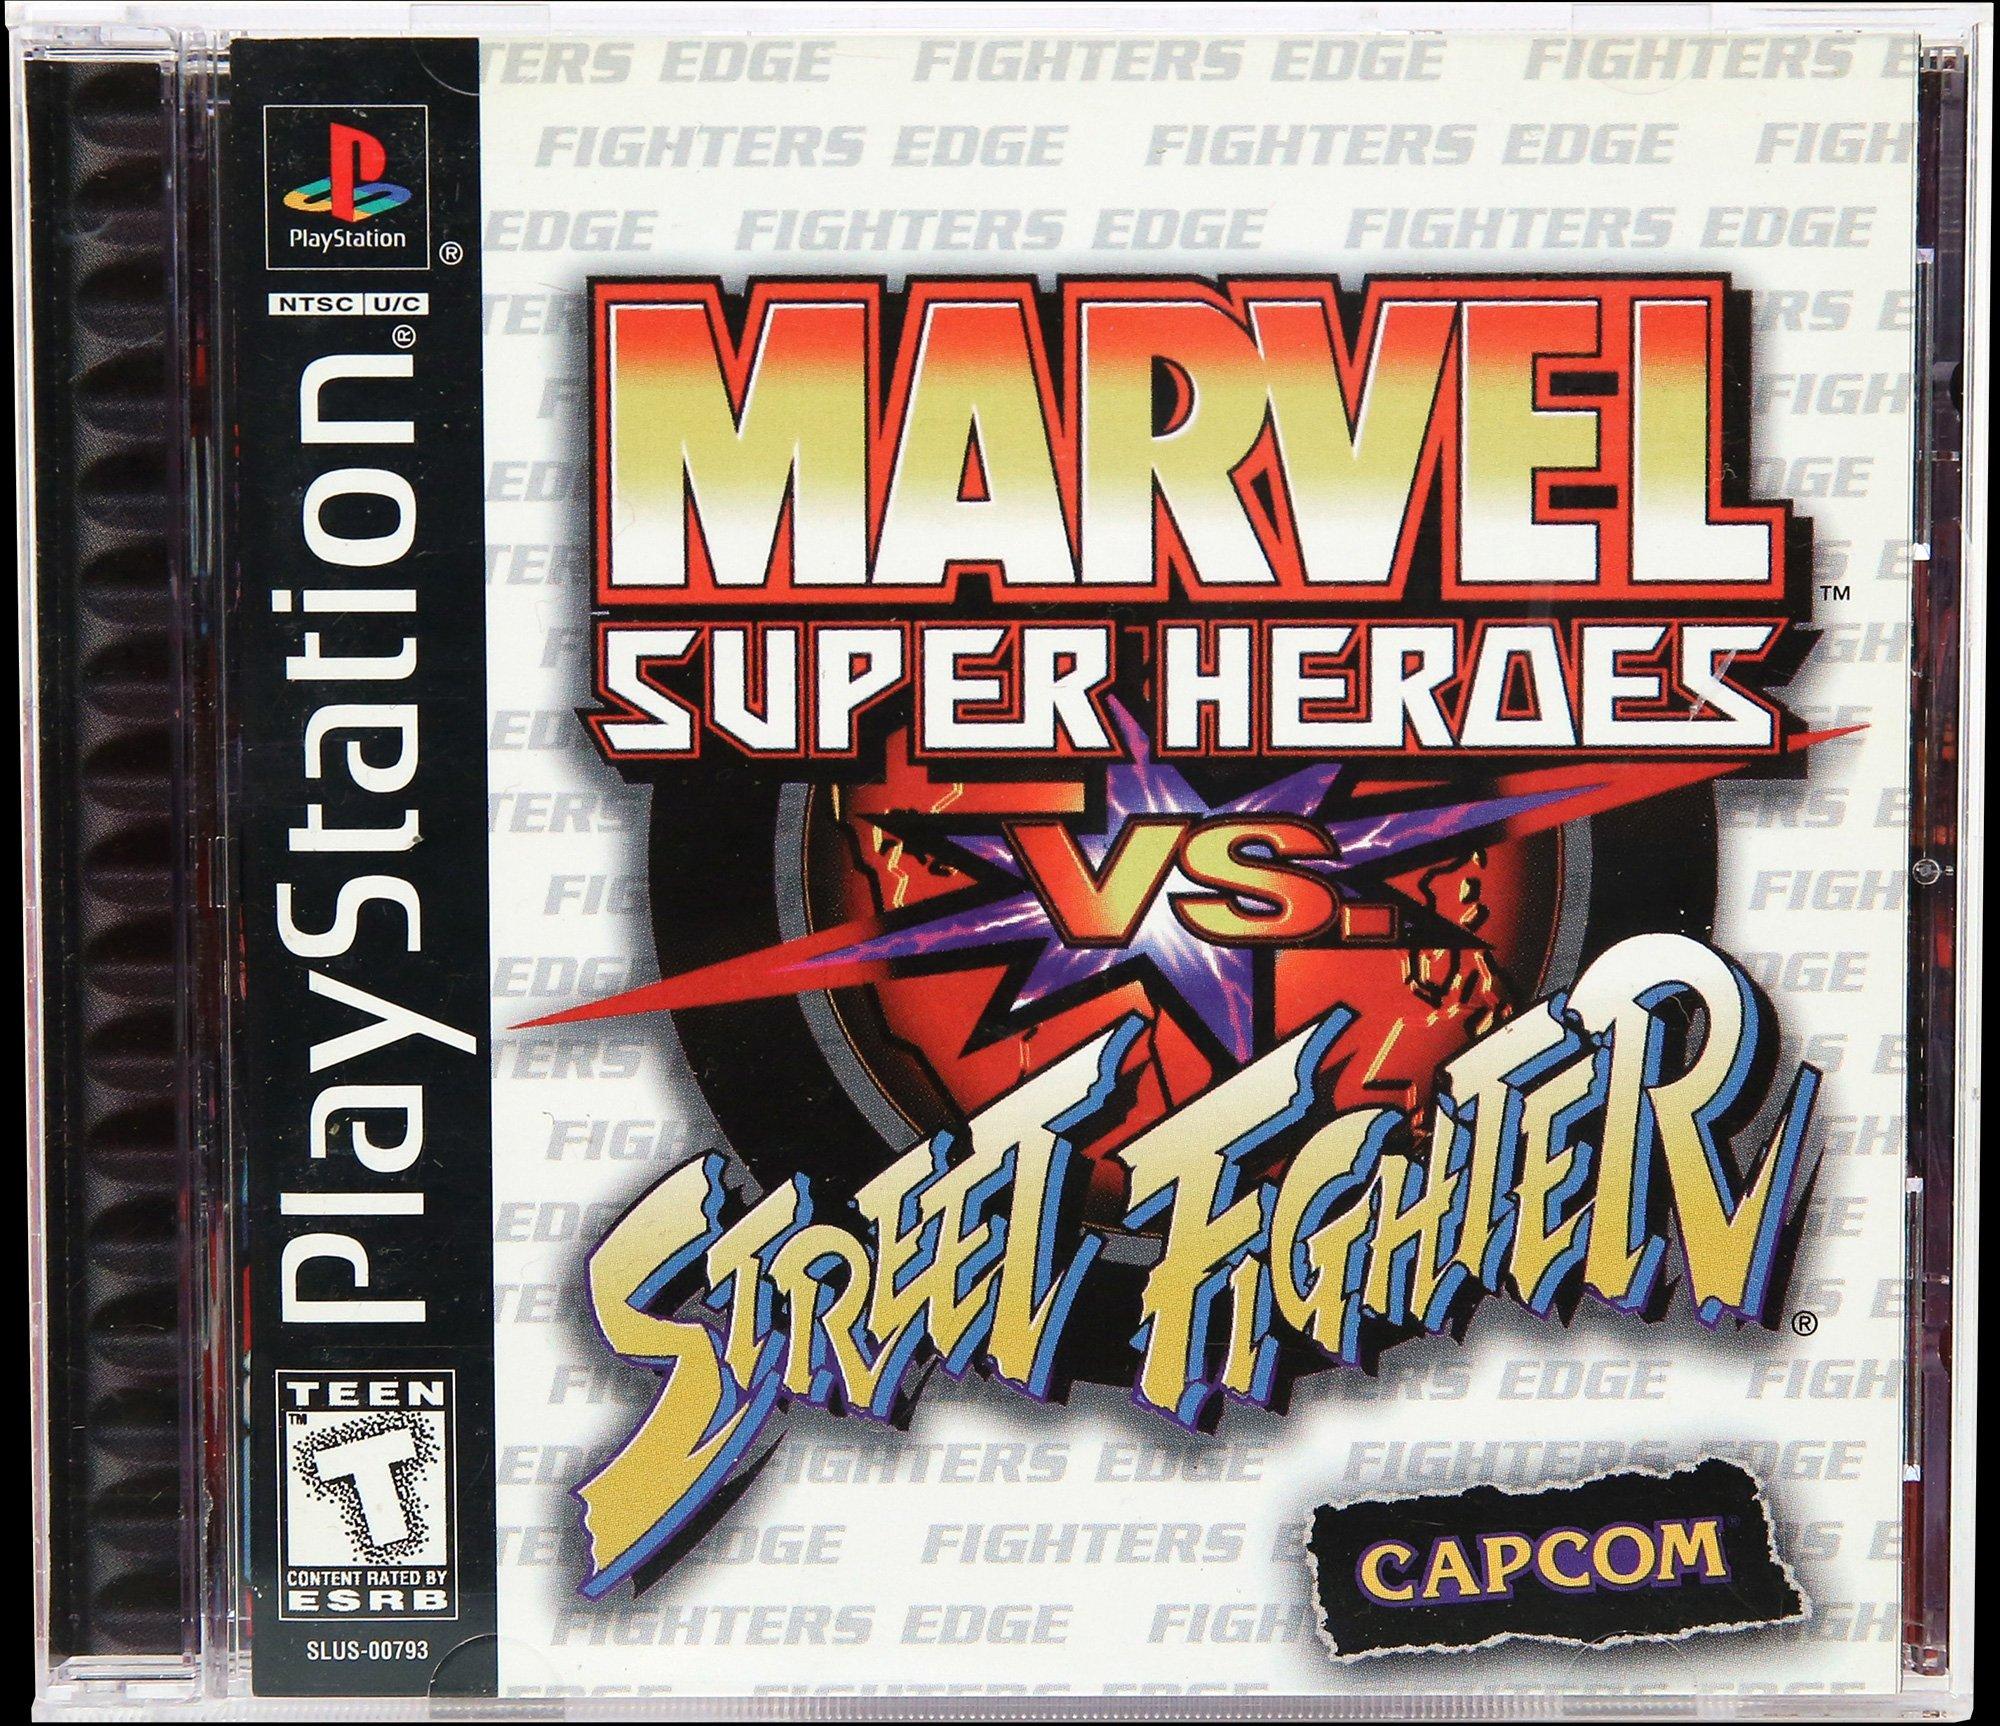 Marvel Super Heroes vs. Street Fighter - PlayStation